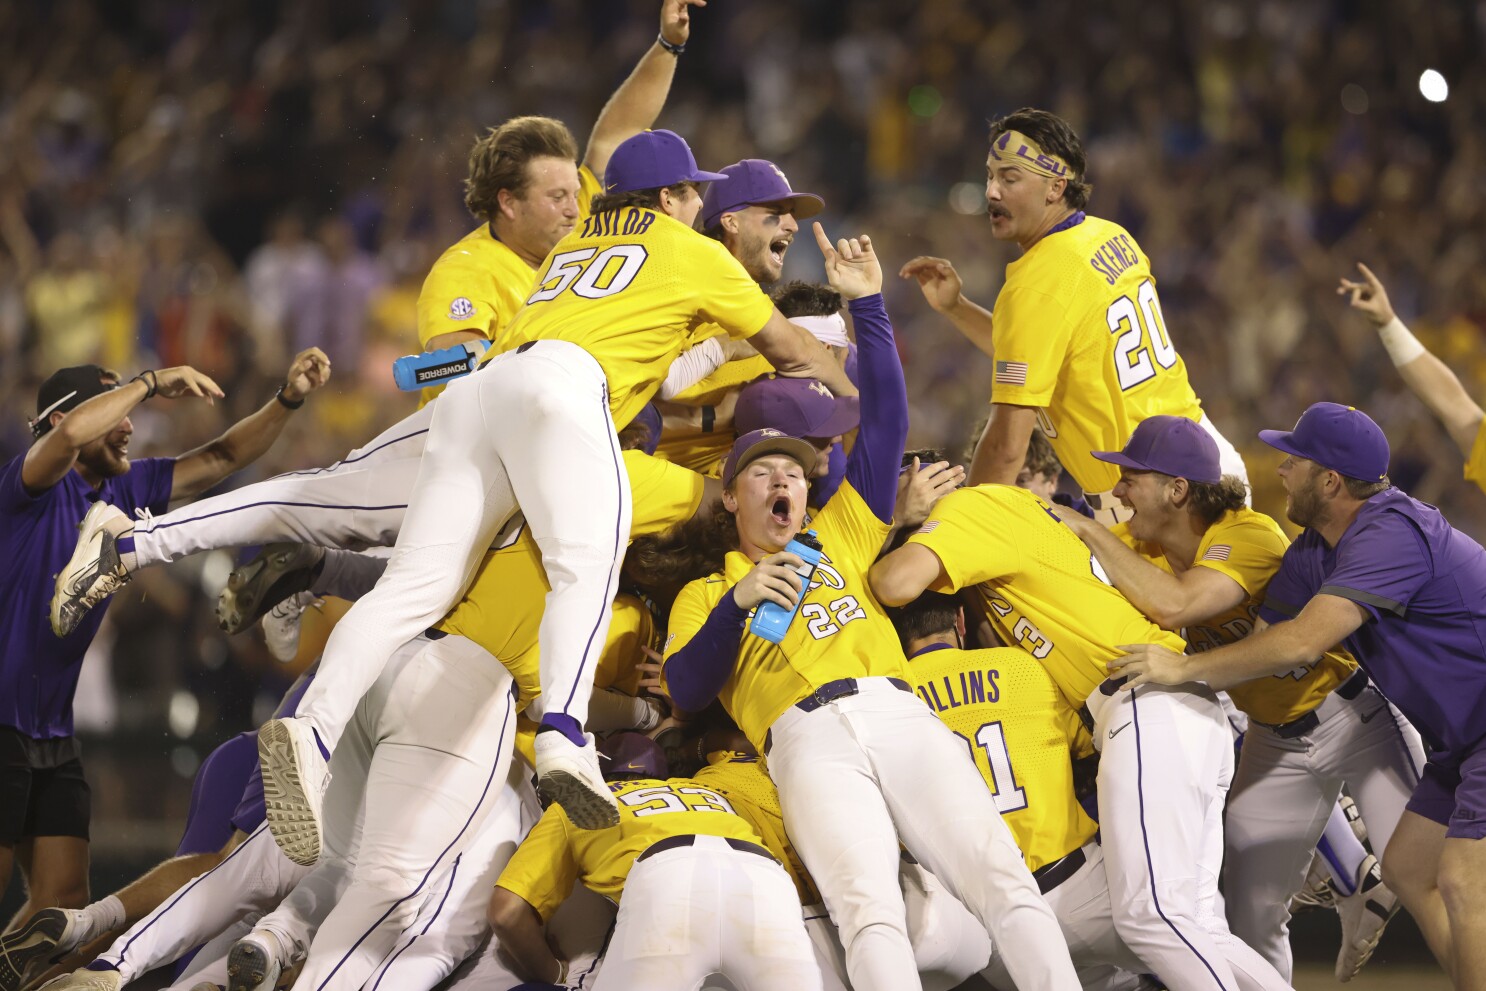 Photos: How LSU Baseball celebrated its national championship win